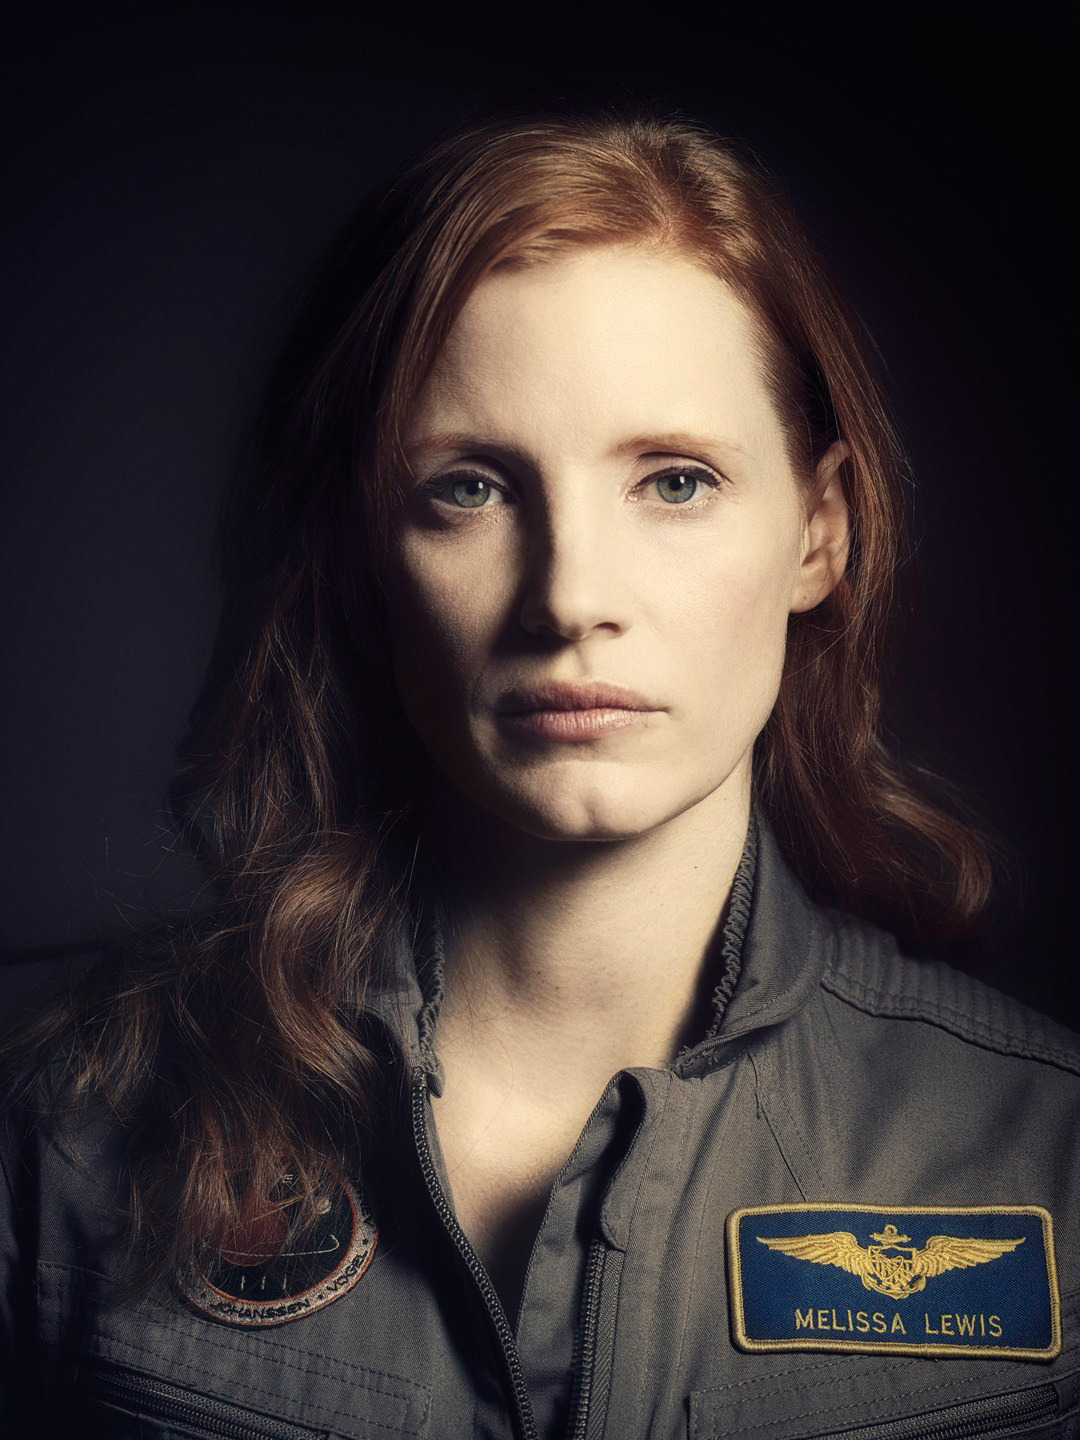 pedroam-bang - Commander Melissa Lewis - Ares III Mission Crew...